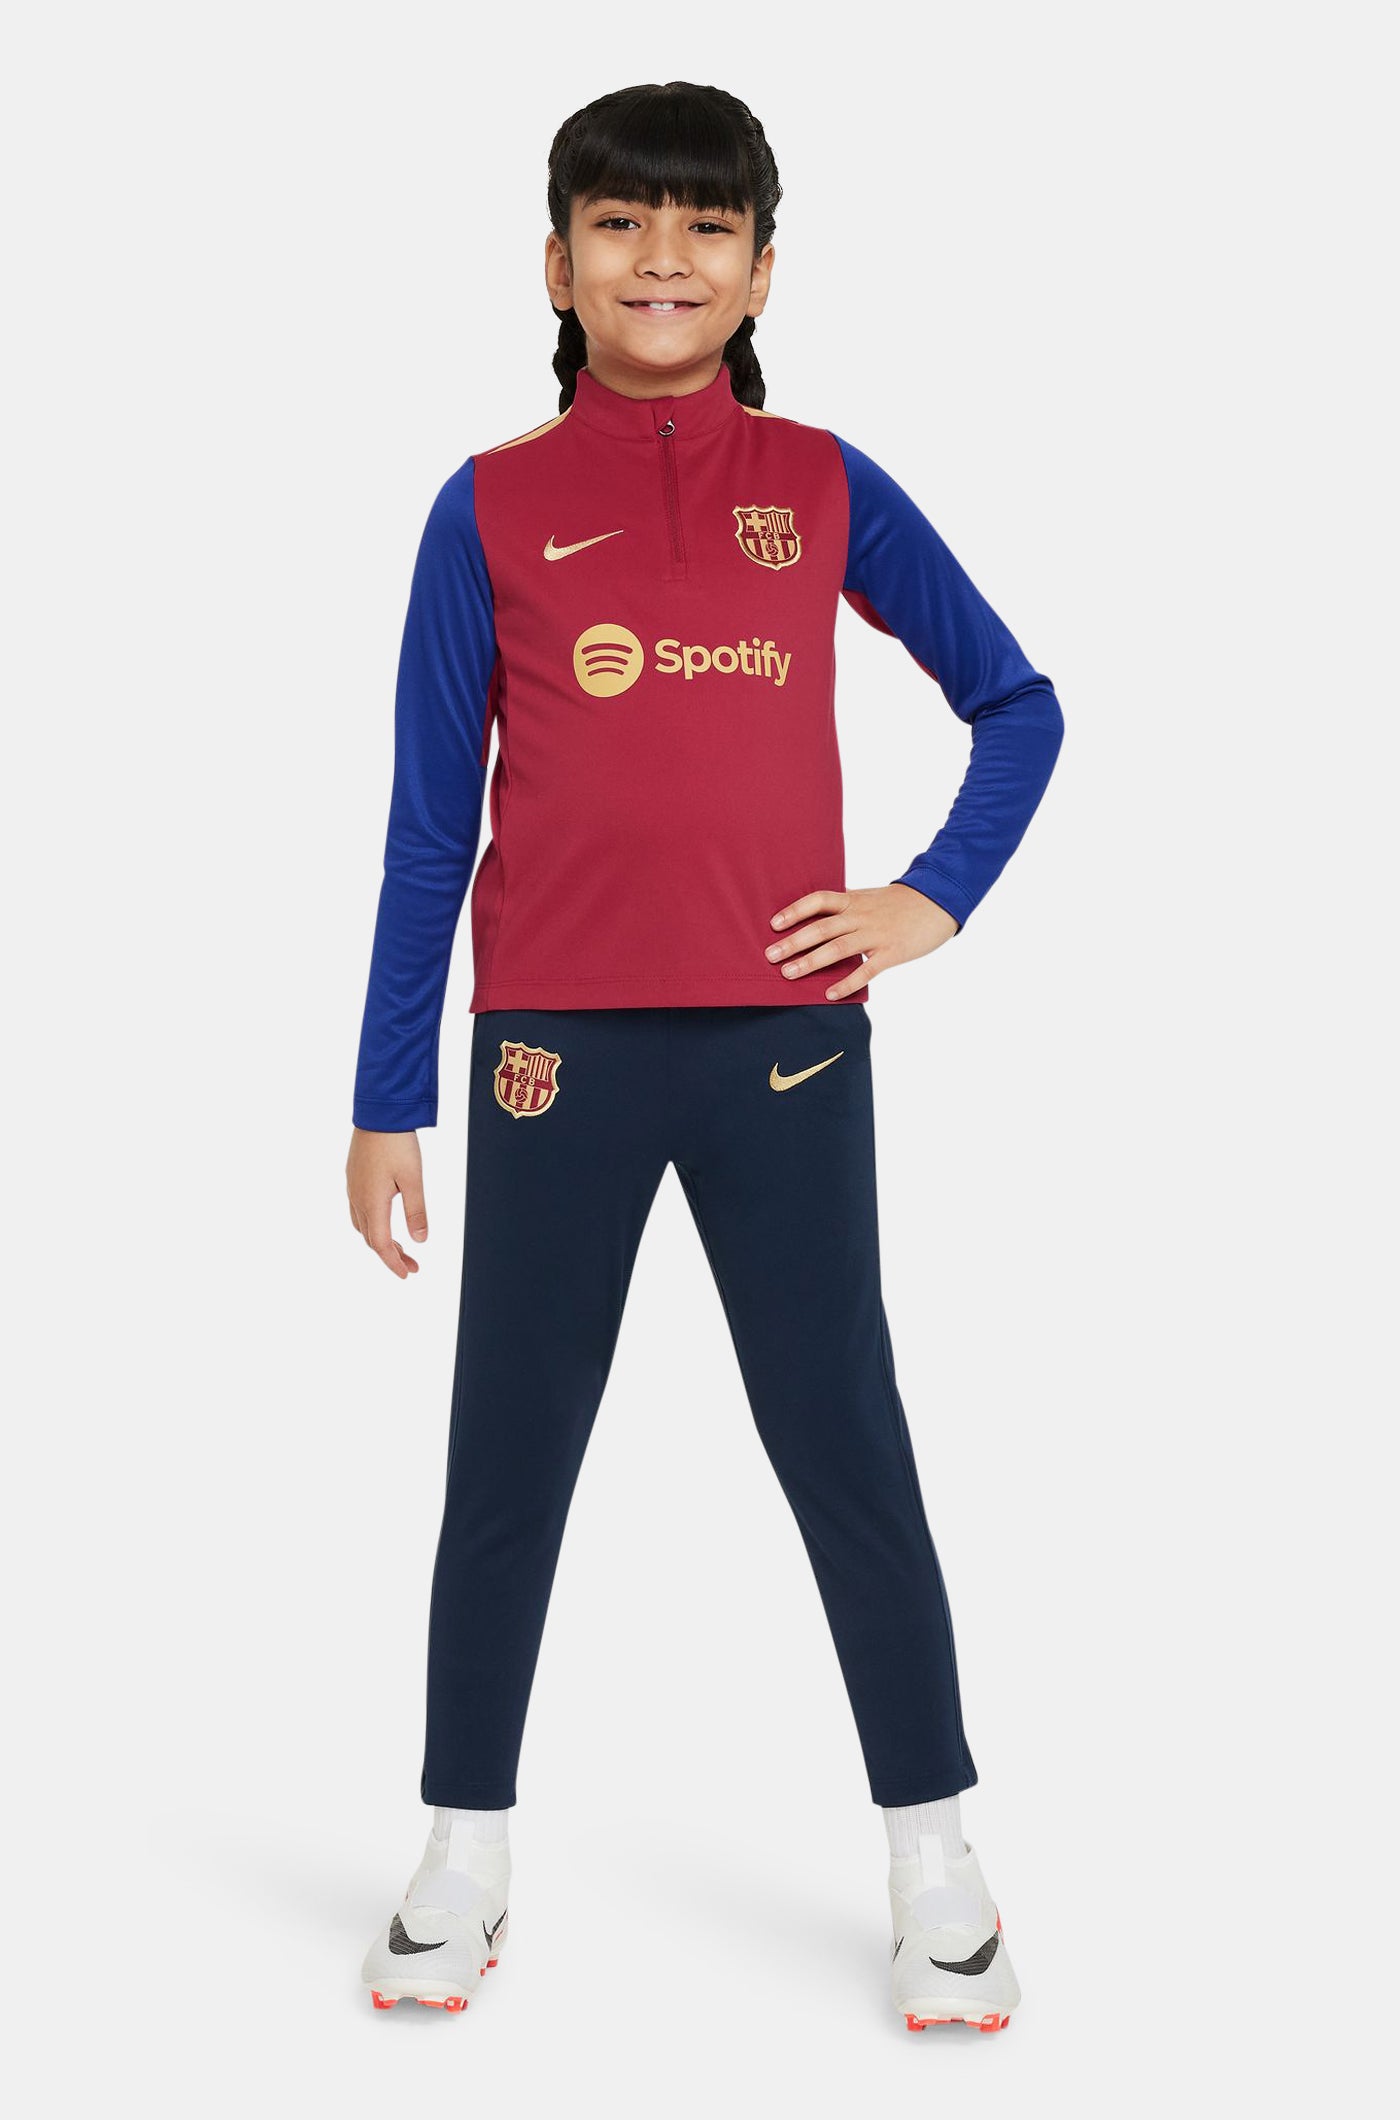 FC Barcelona – sweatshirt garnet Spotify training Camp - Nou Barça Younger 23/24 kids Store Official